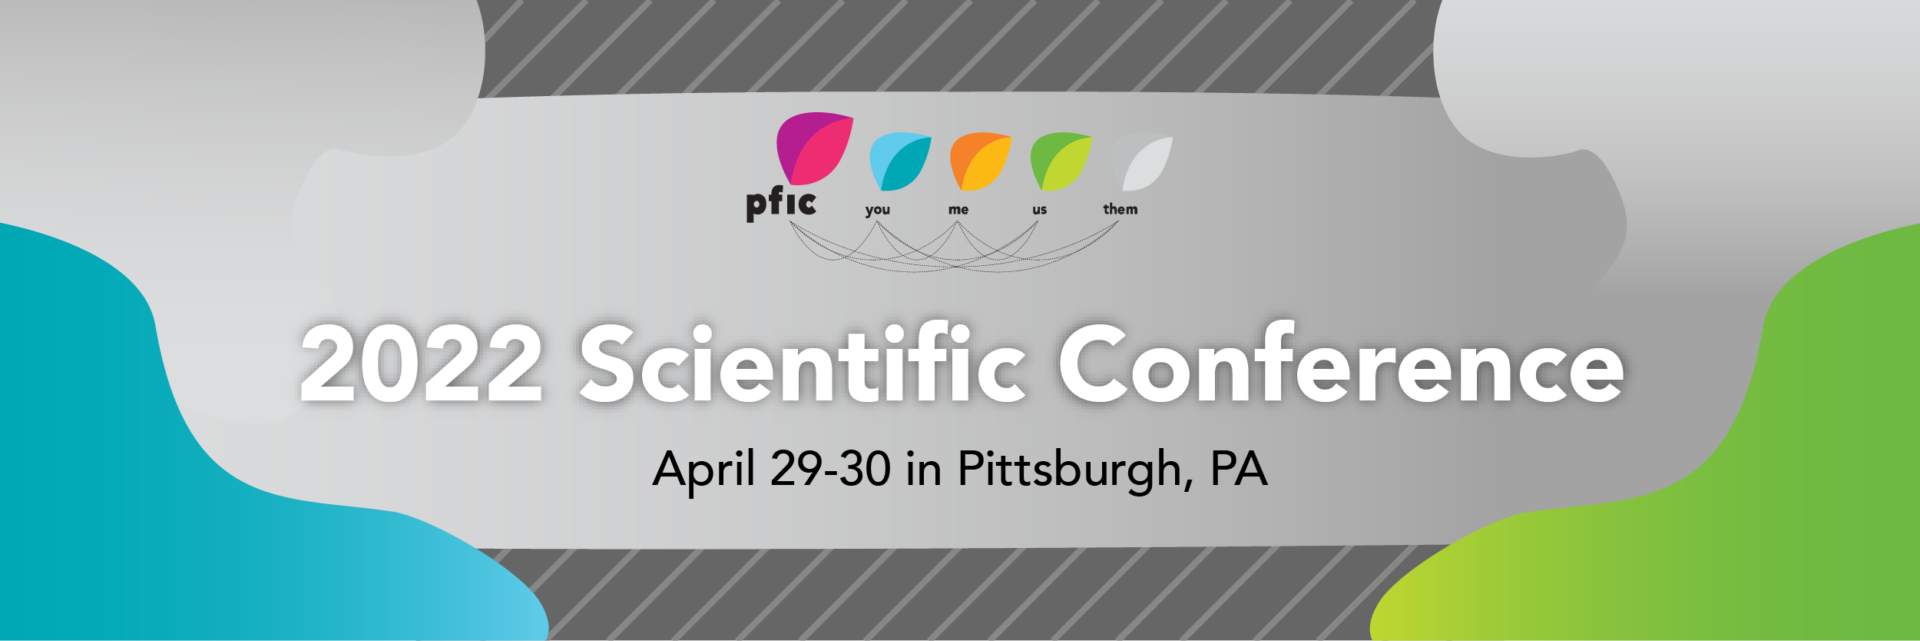 interior 2022 PFIC Scientific Conference banner image